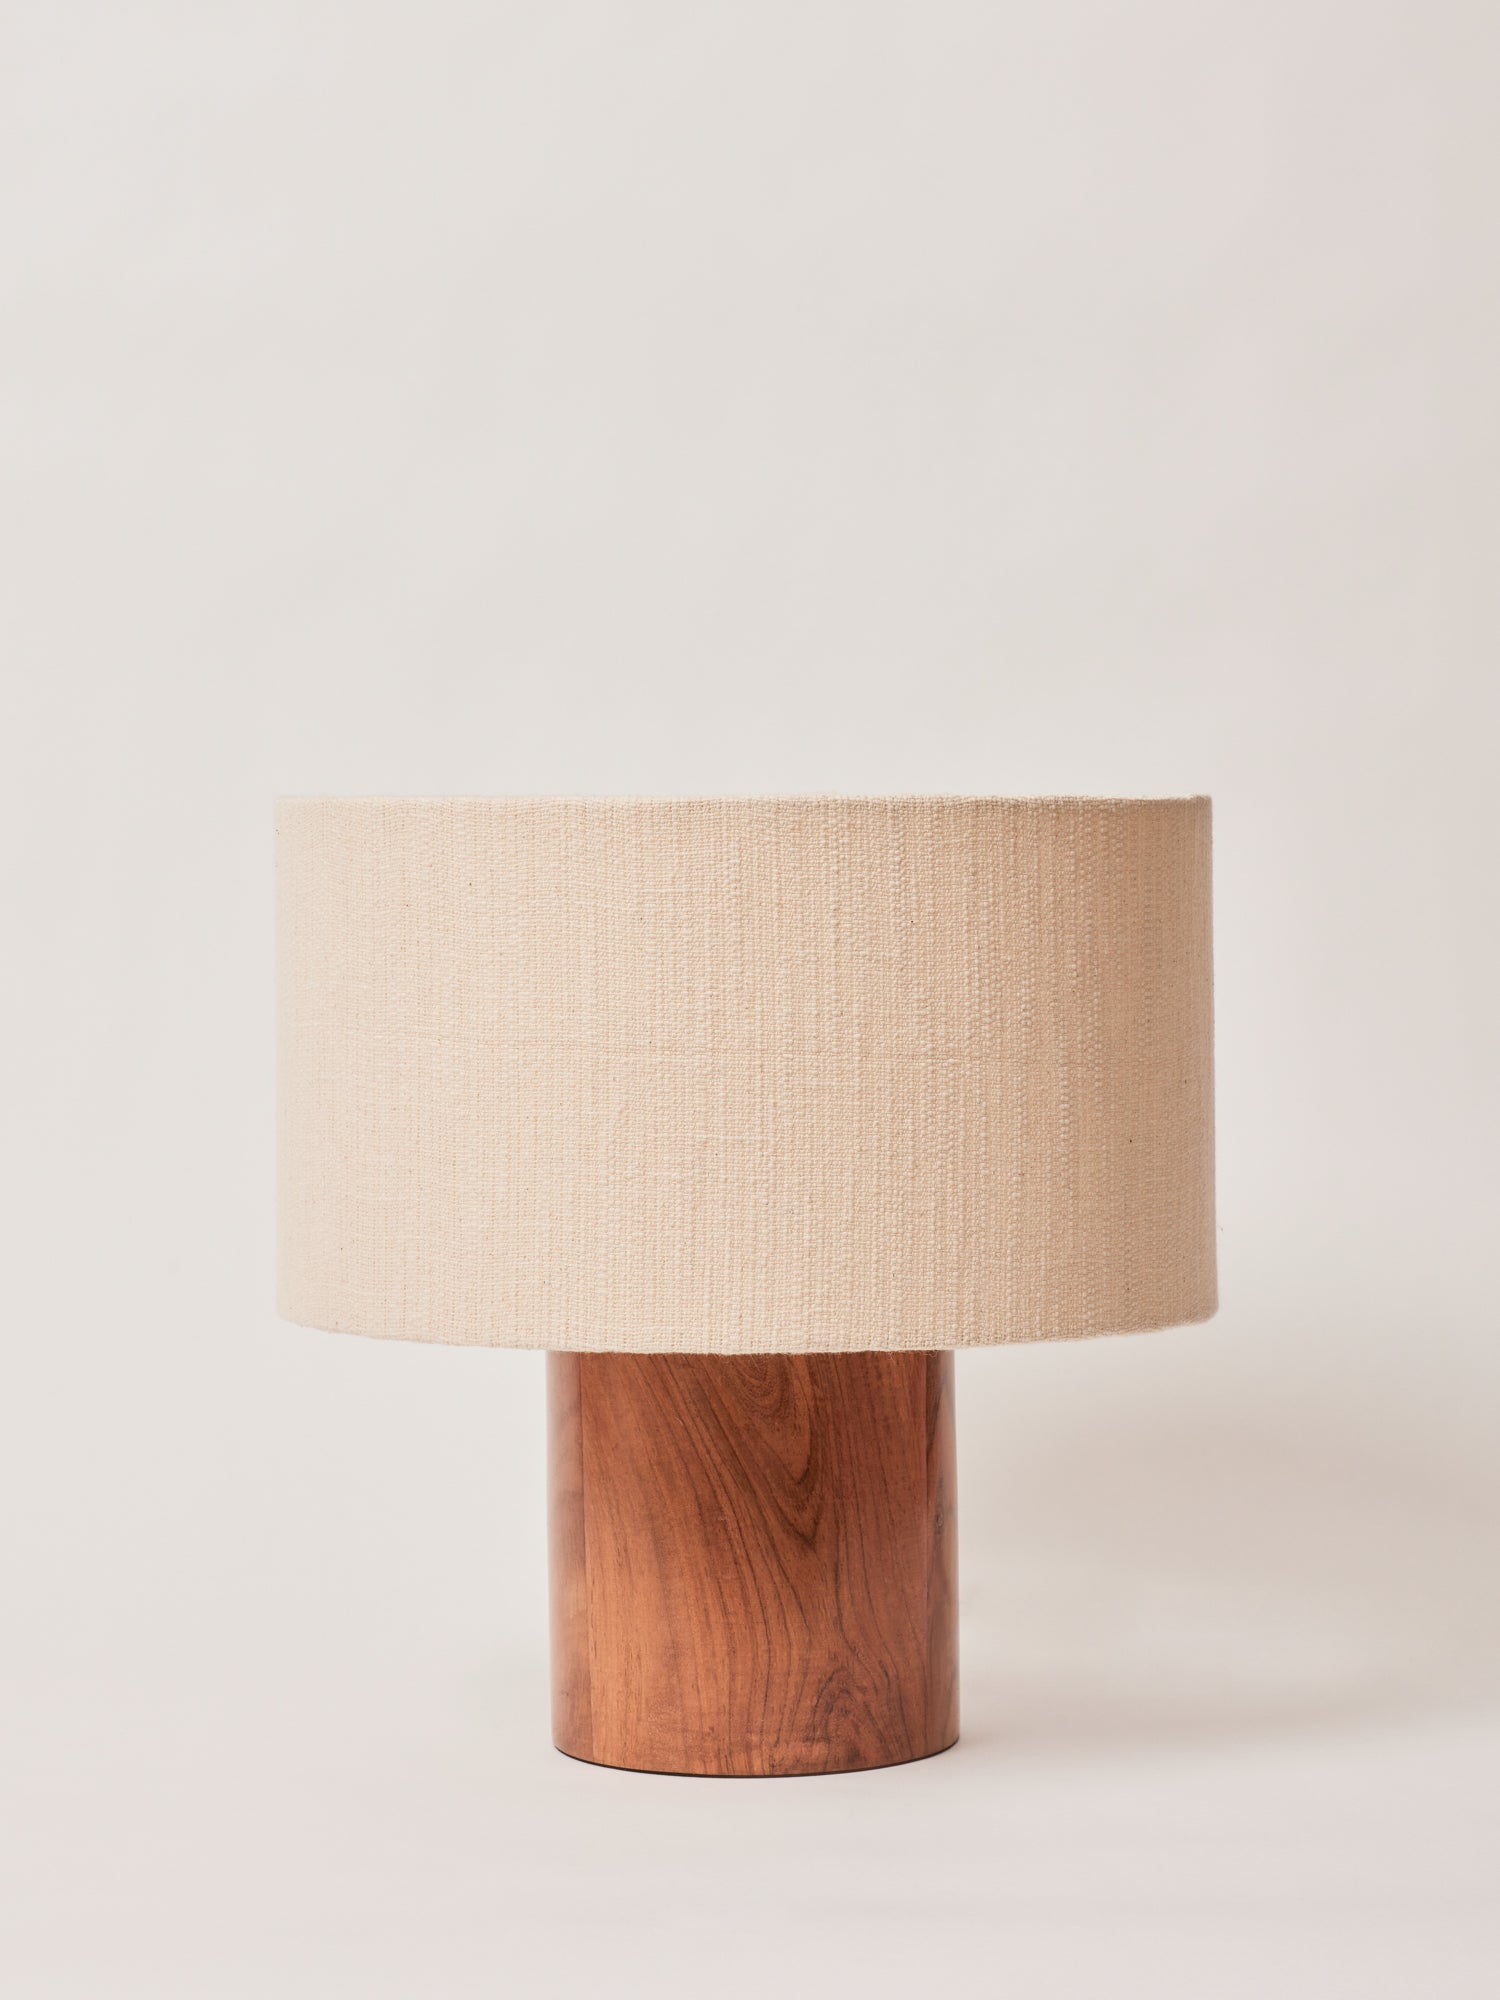 Skog table Lamp by Fleck